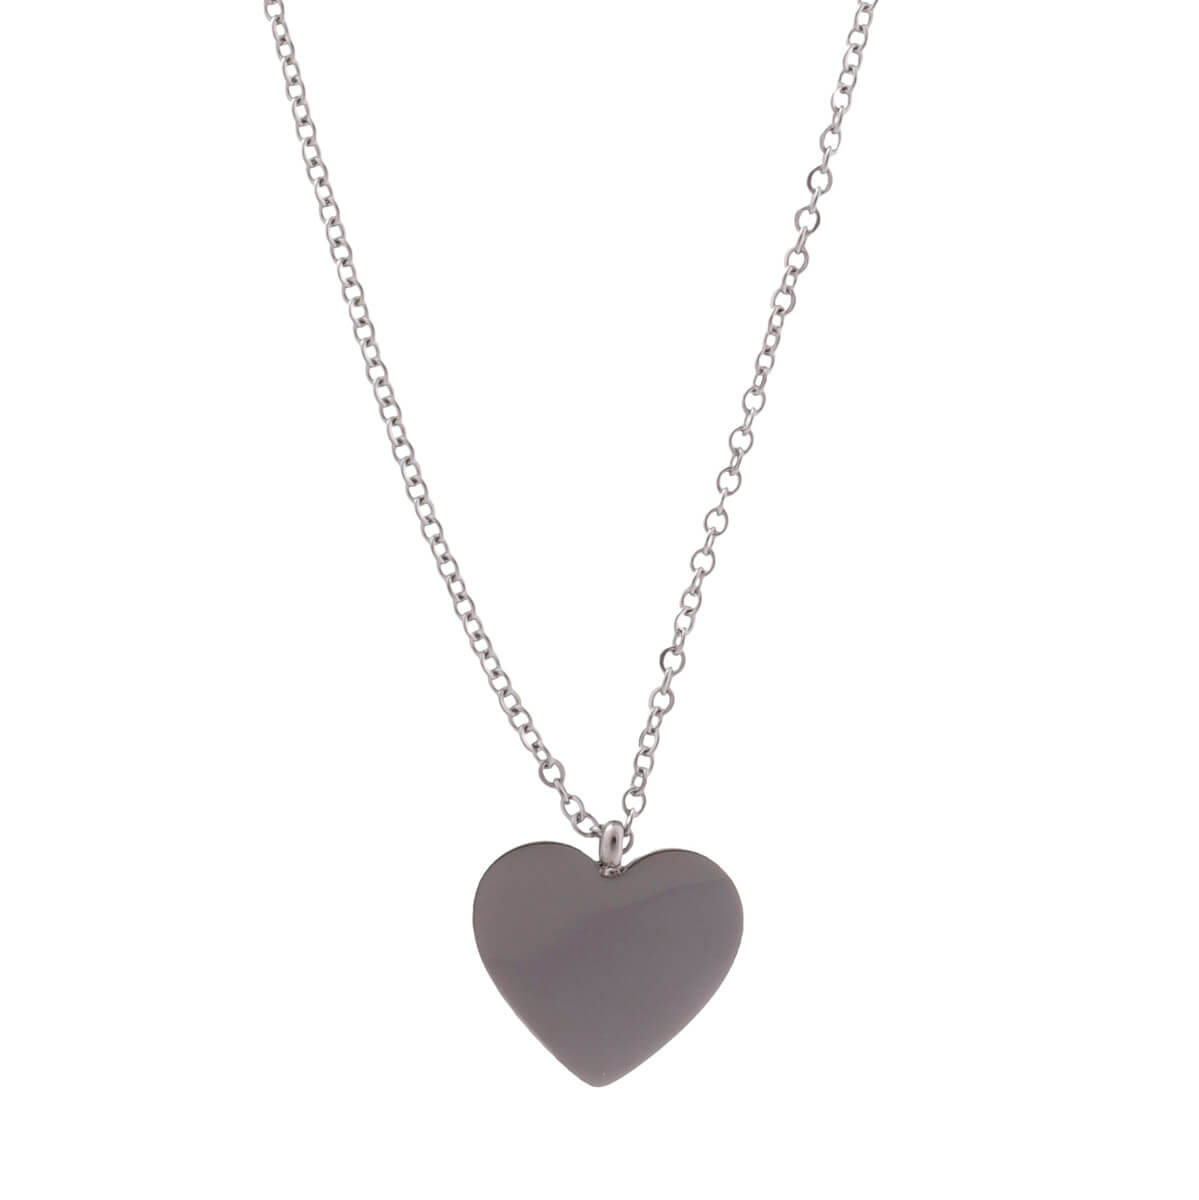 Heart pendant necklace (steel)